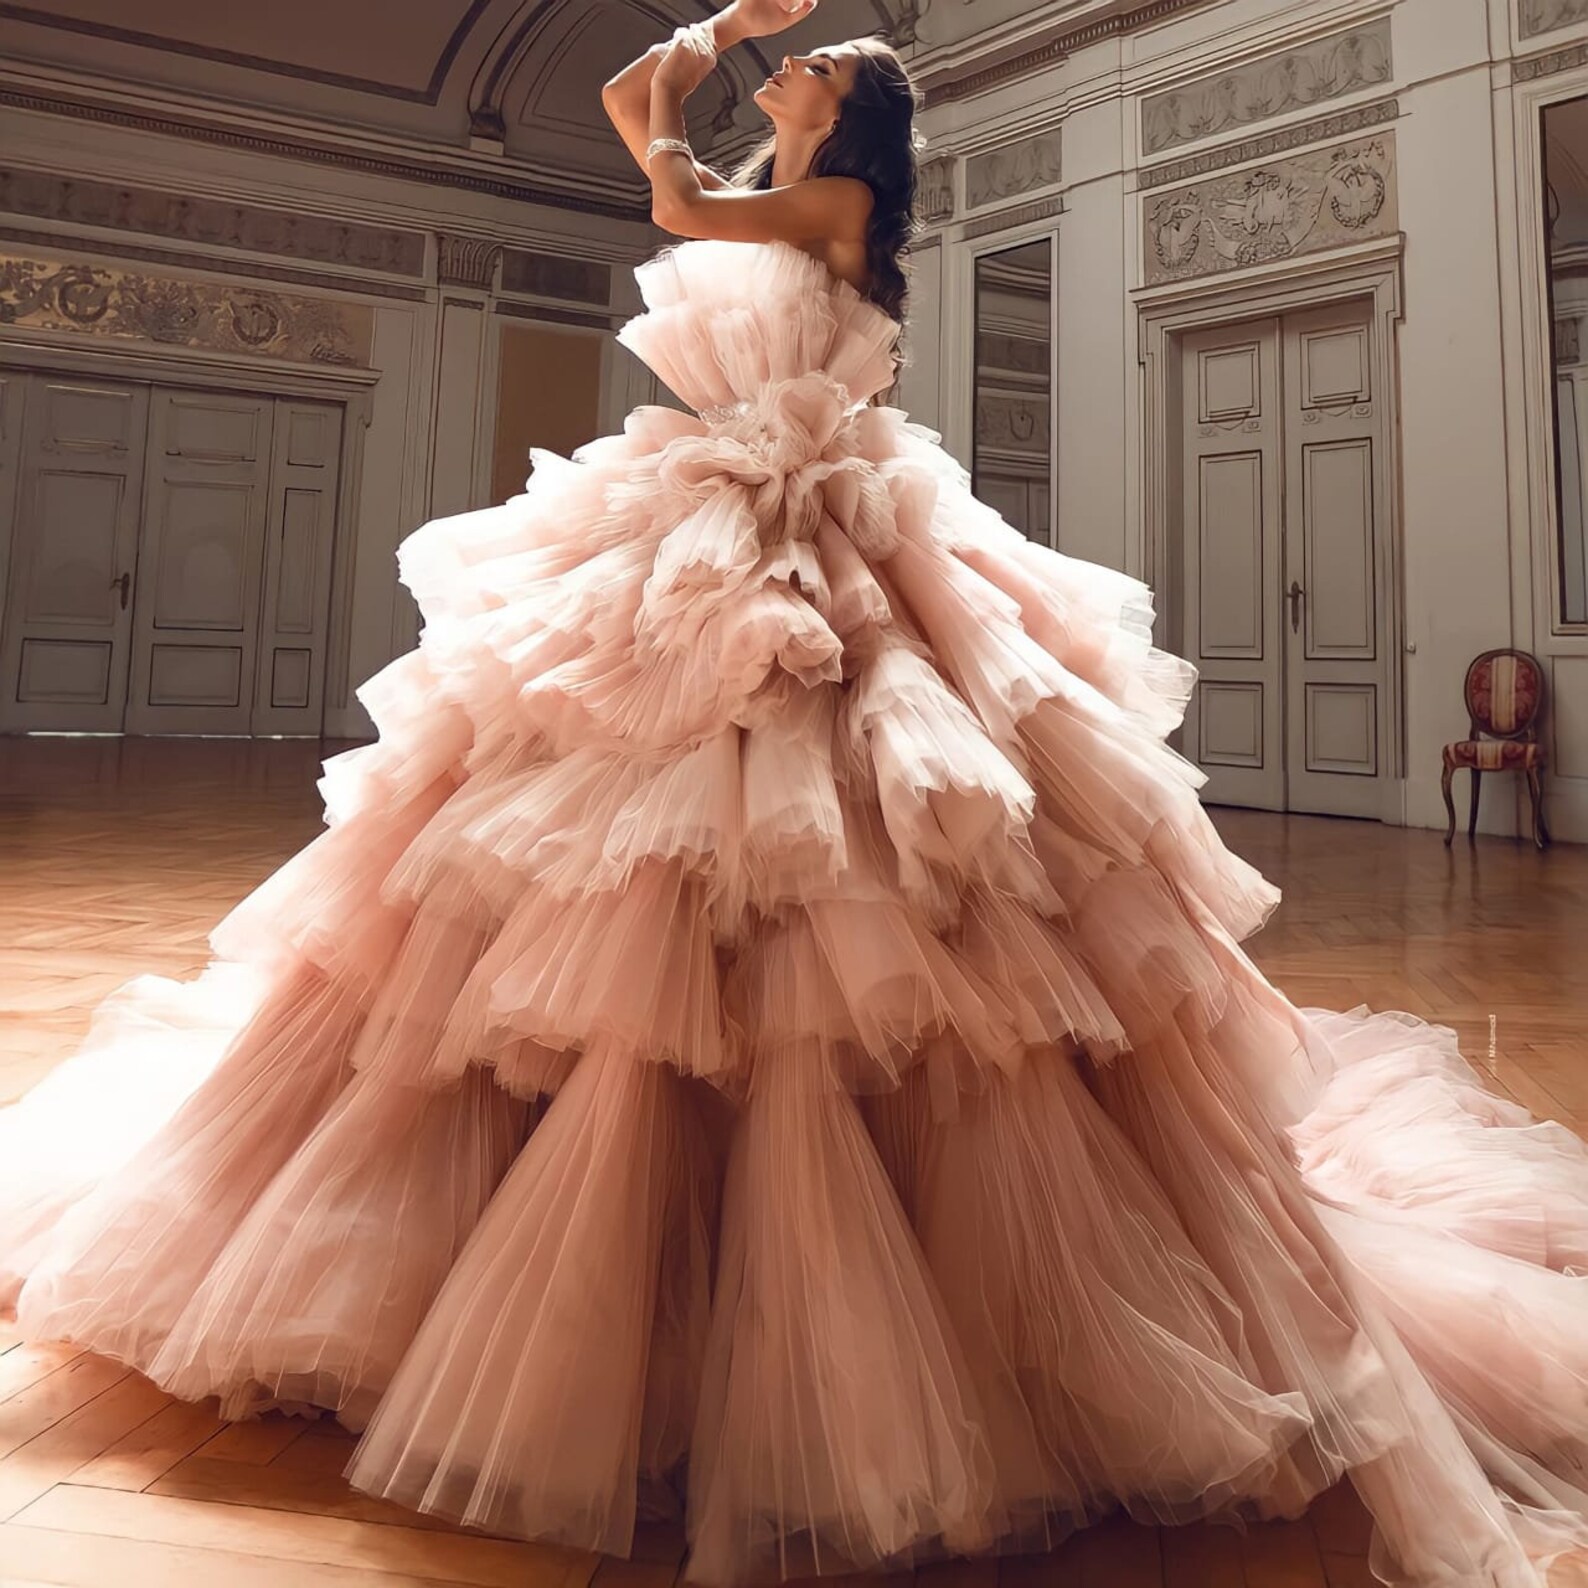 Tutu Maxi Dress/ Full Length Tulle Skirt/Prom Dress/Photoshoot | Etsy